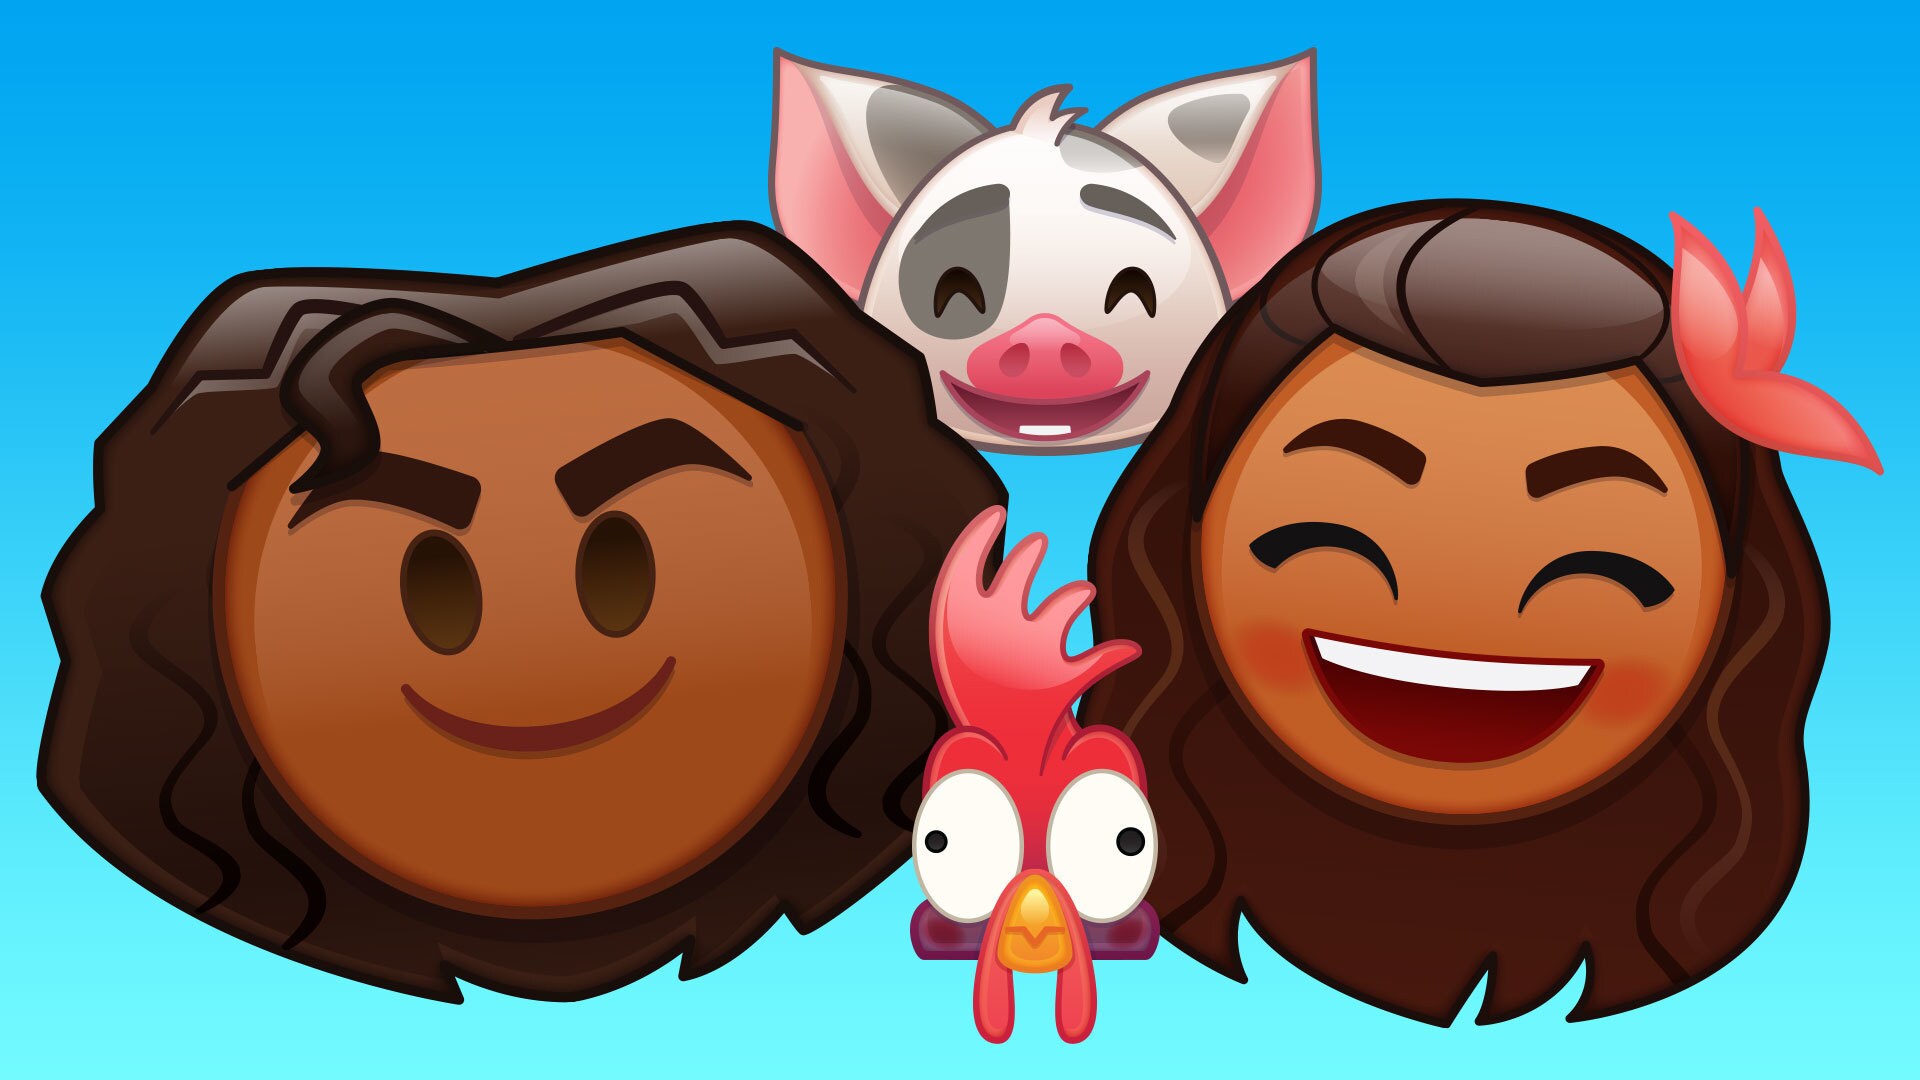 Moana | Disney As Told by Emoji